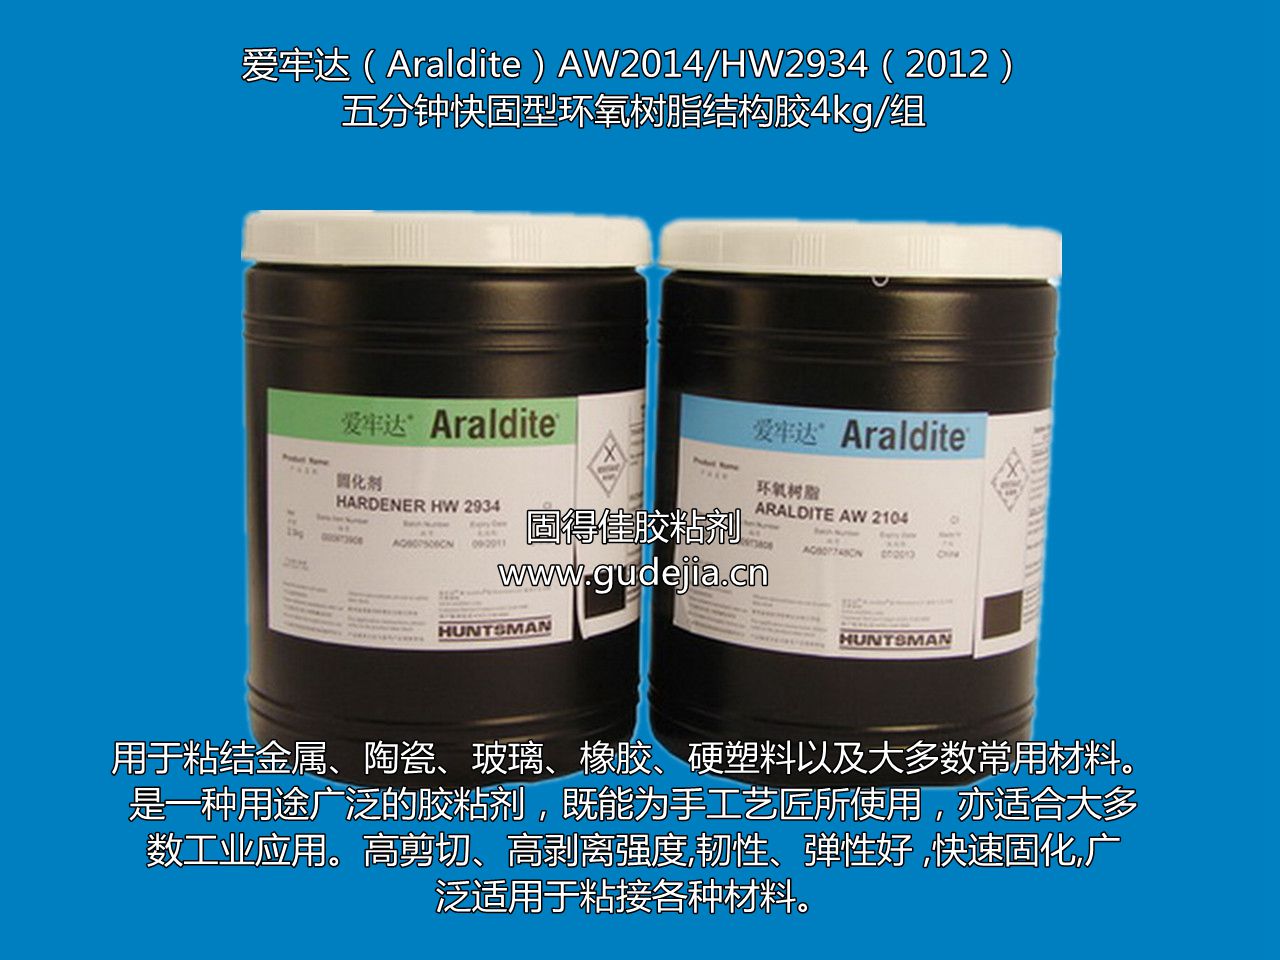 312 31 Araldite Eroda Aw2104 Hw2934 Epoxy Resin Ab Glue 12 Packaging From Best Taobao Agent Taobao International International Ecommerce Newbecca Com